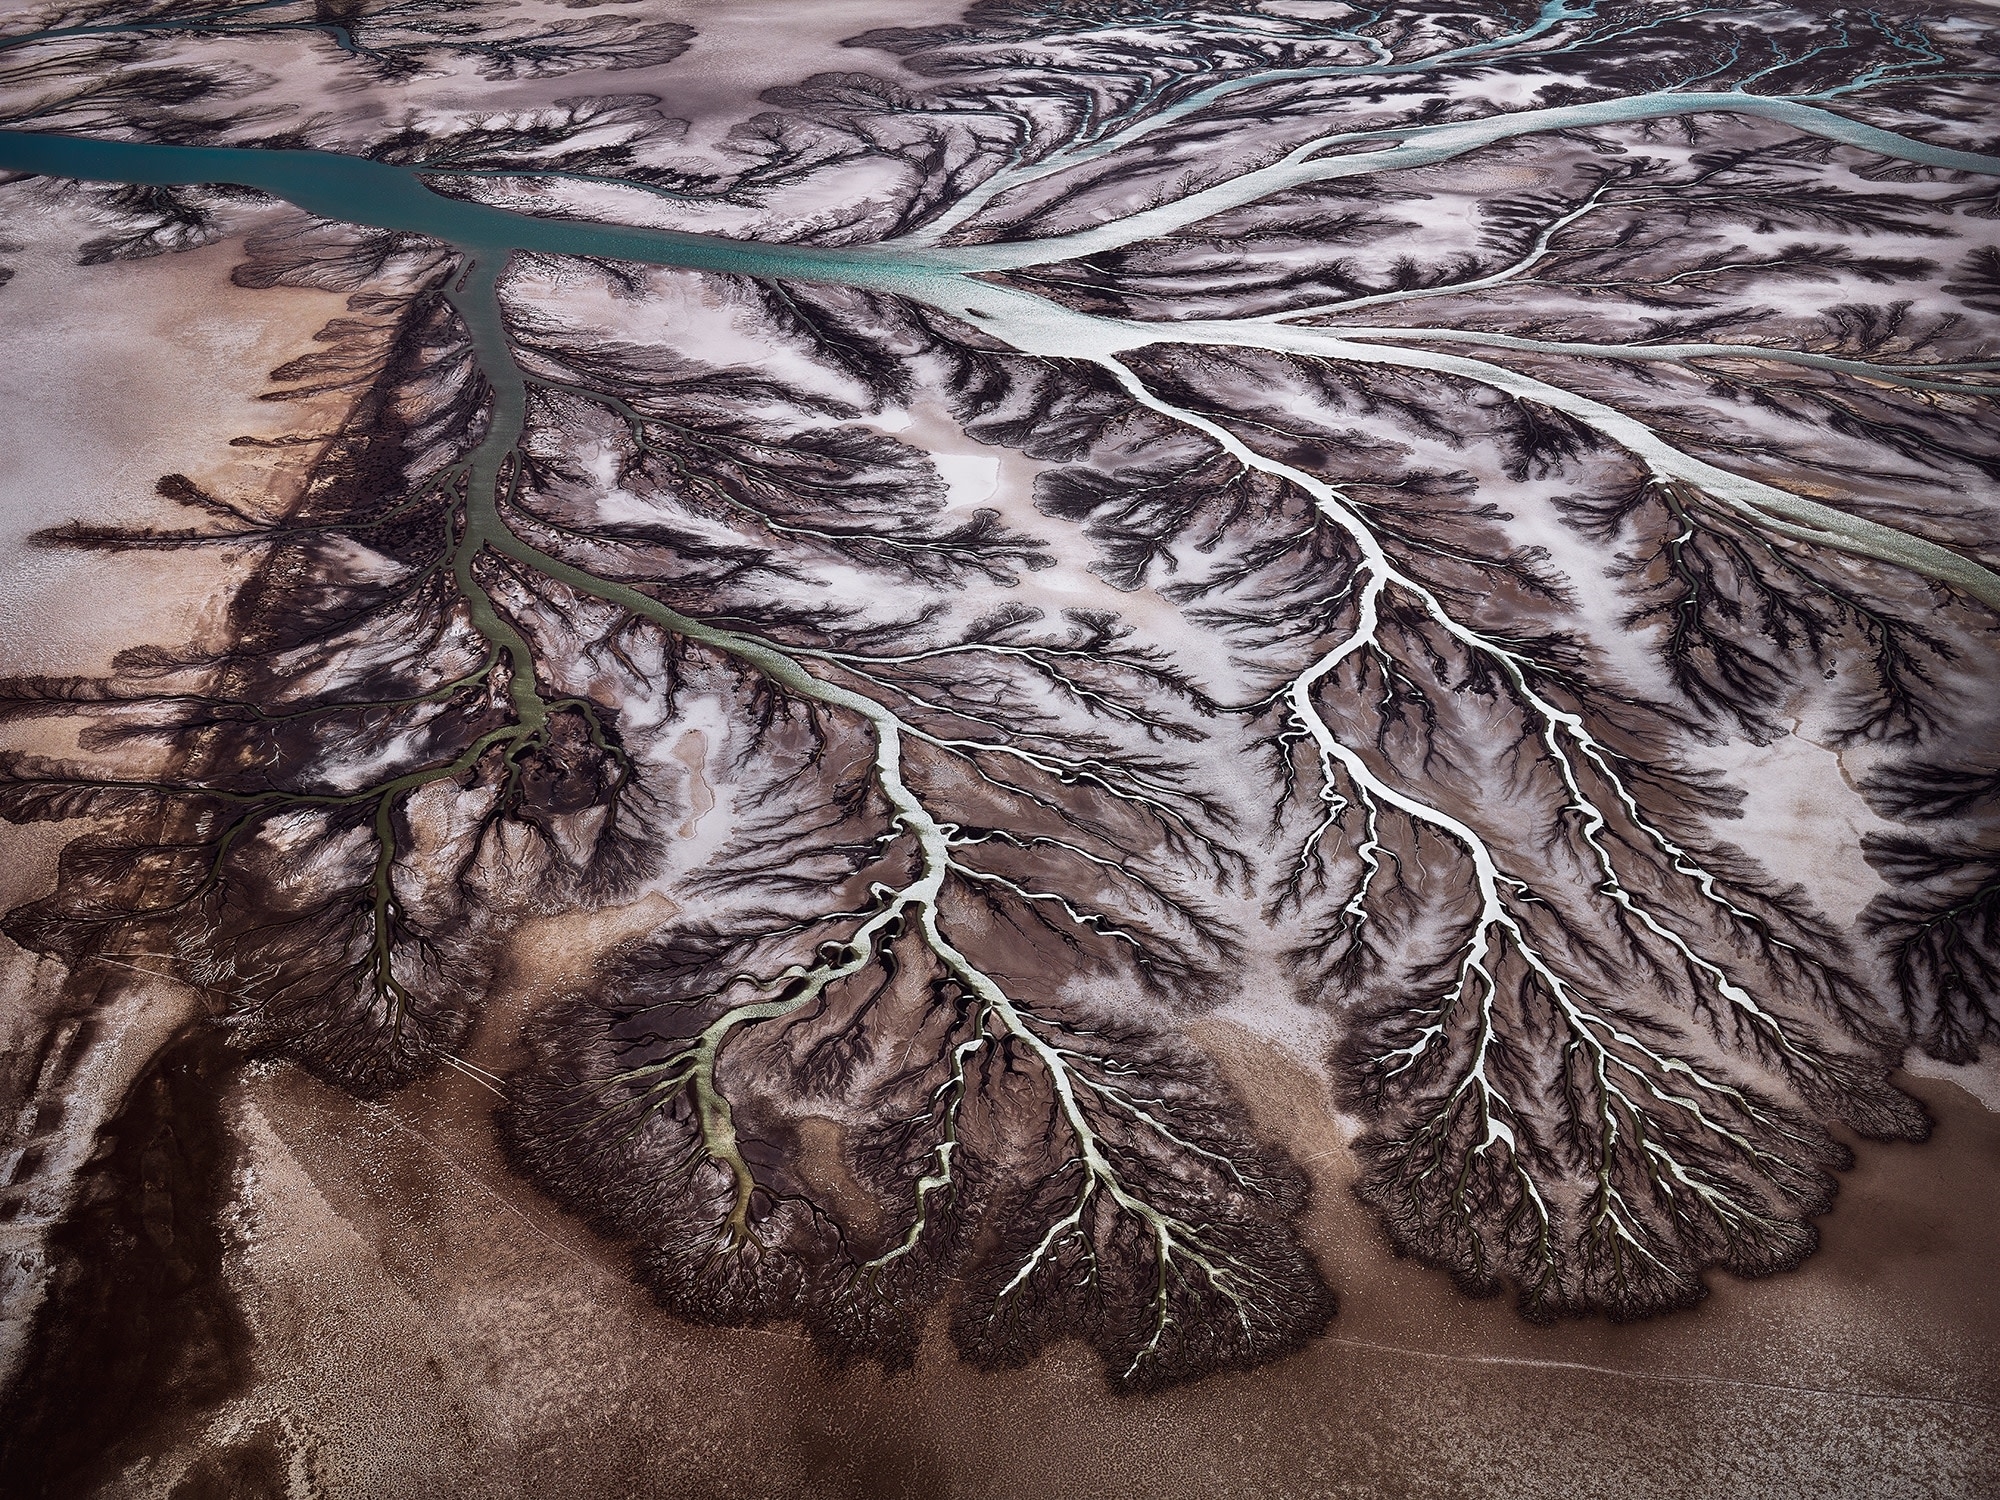 Colorado River Delta #1, Near San Felipe Baja, Mexico - Edward Burtynsky